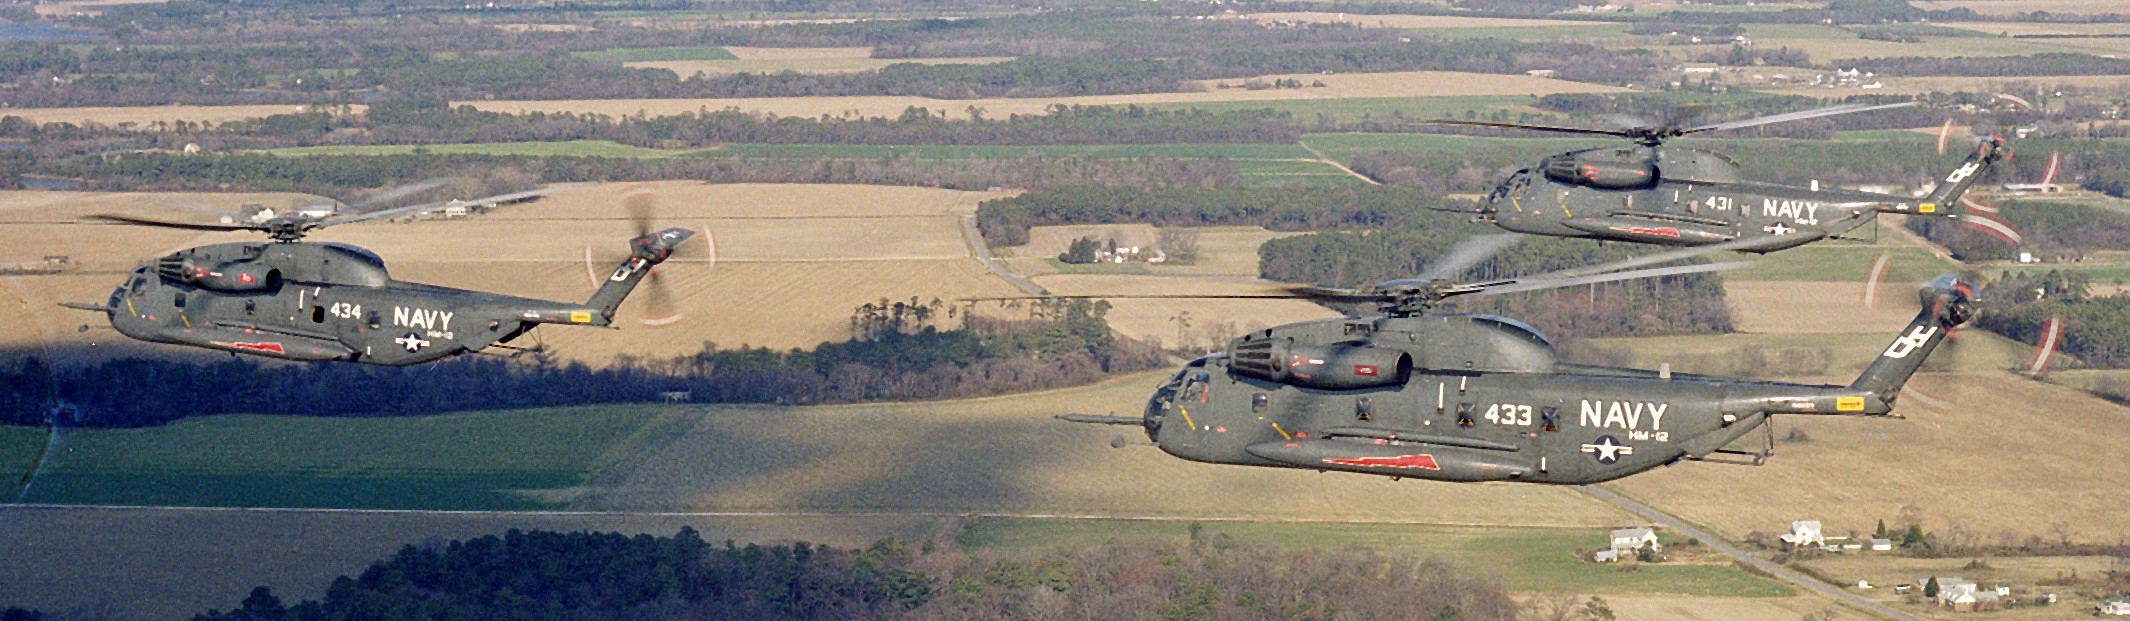 hm-12 sea dragons helicopter mine countermeasures squadron navy rh-53d sea stallion 04